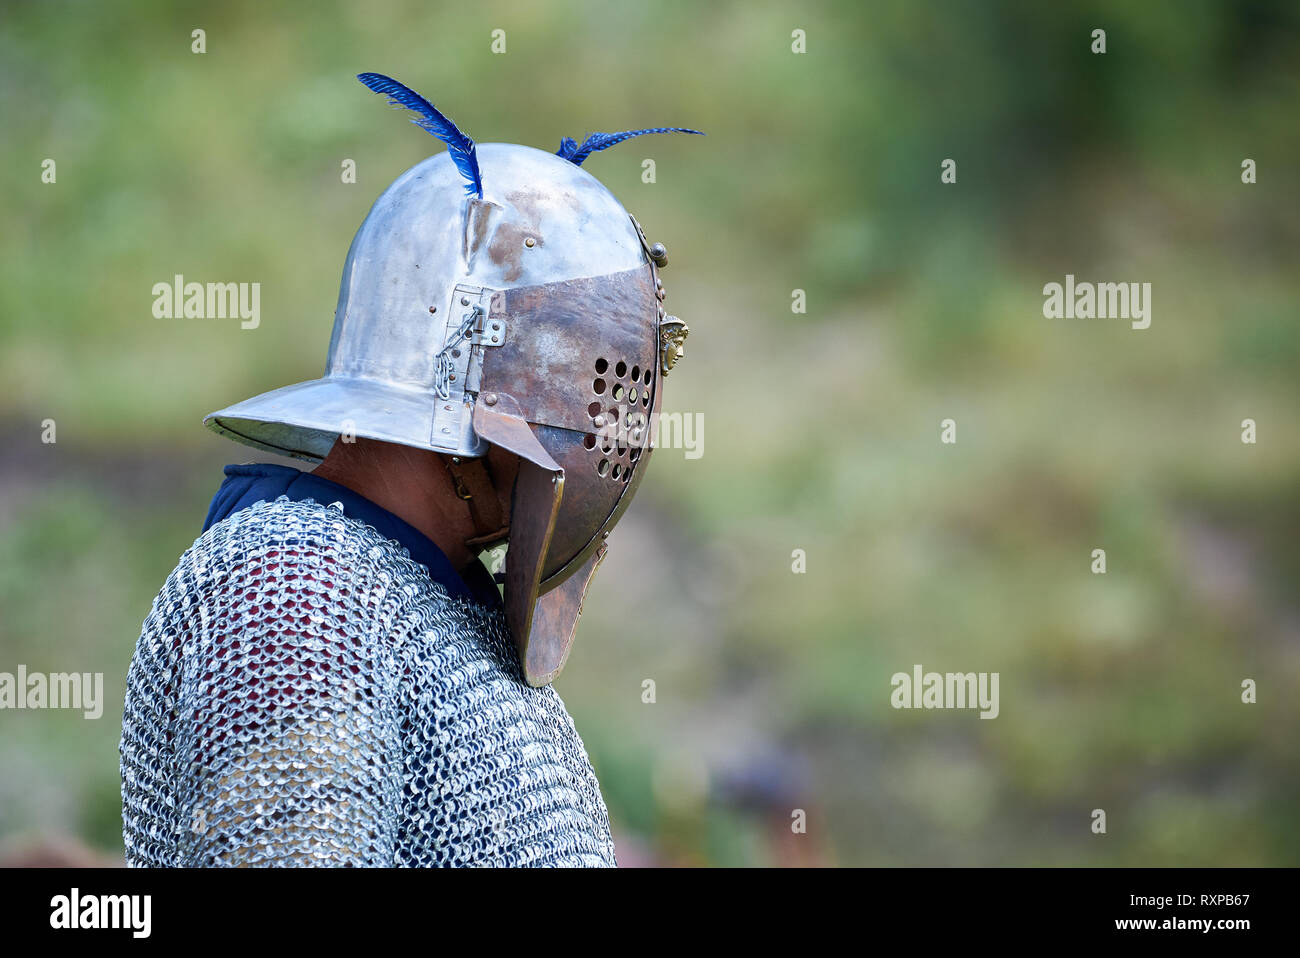 Gladiator with helmet and body armor Stock Photo